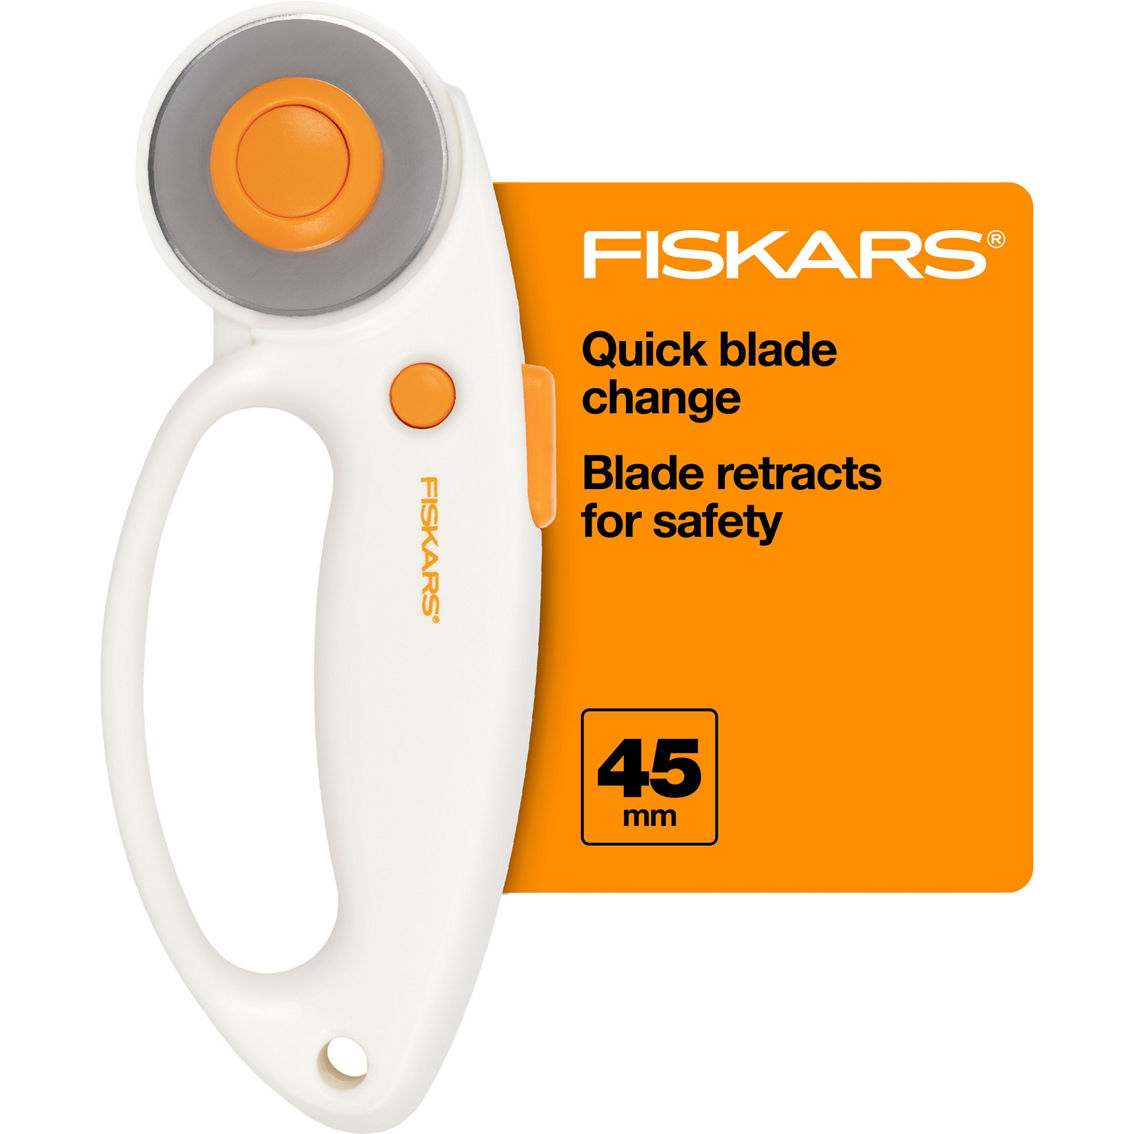 Fiskars Loop Rotary Cutter, 45 mm - Image 4 of 7